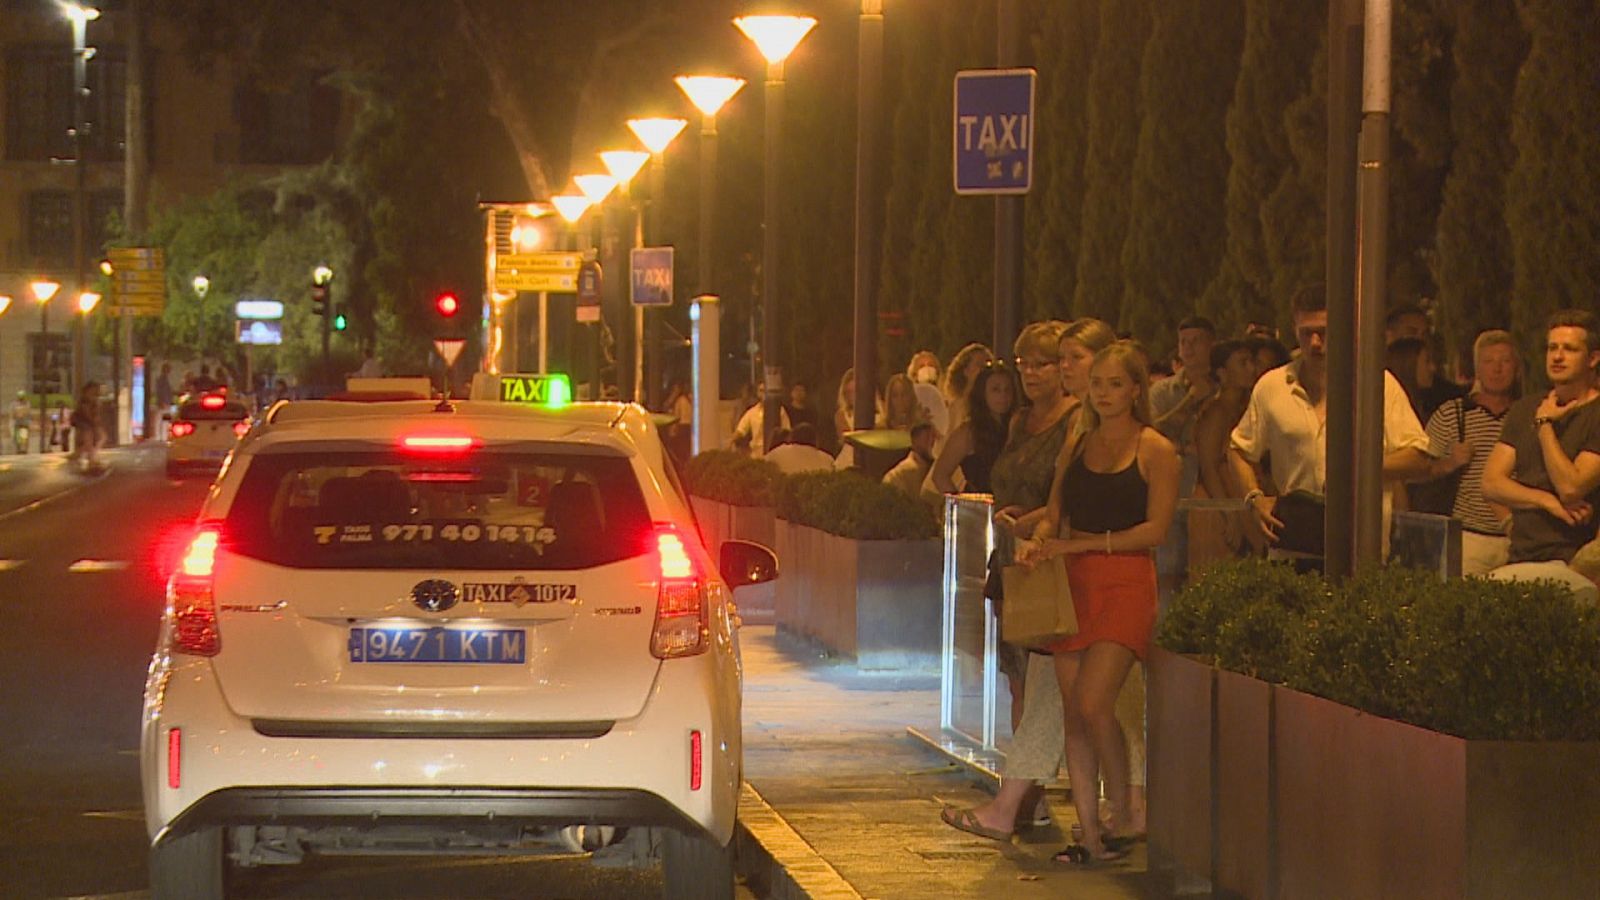 Desenes de turistes esperant un taxi a Palma